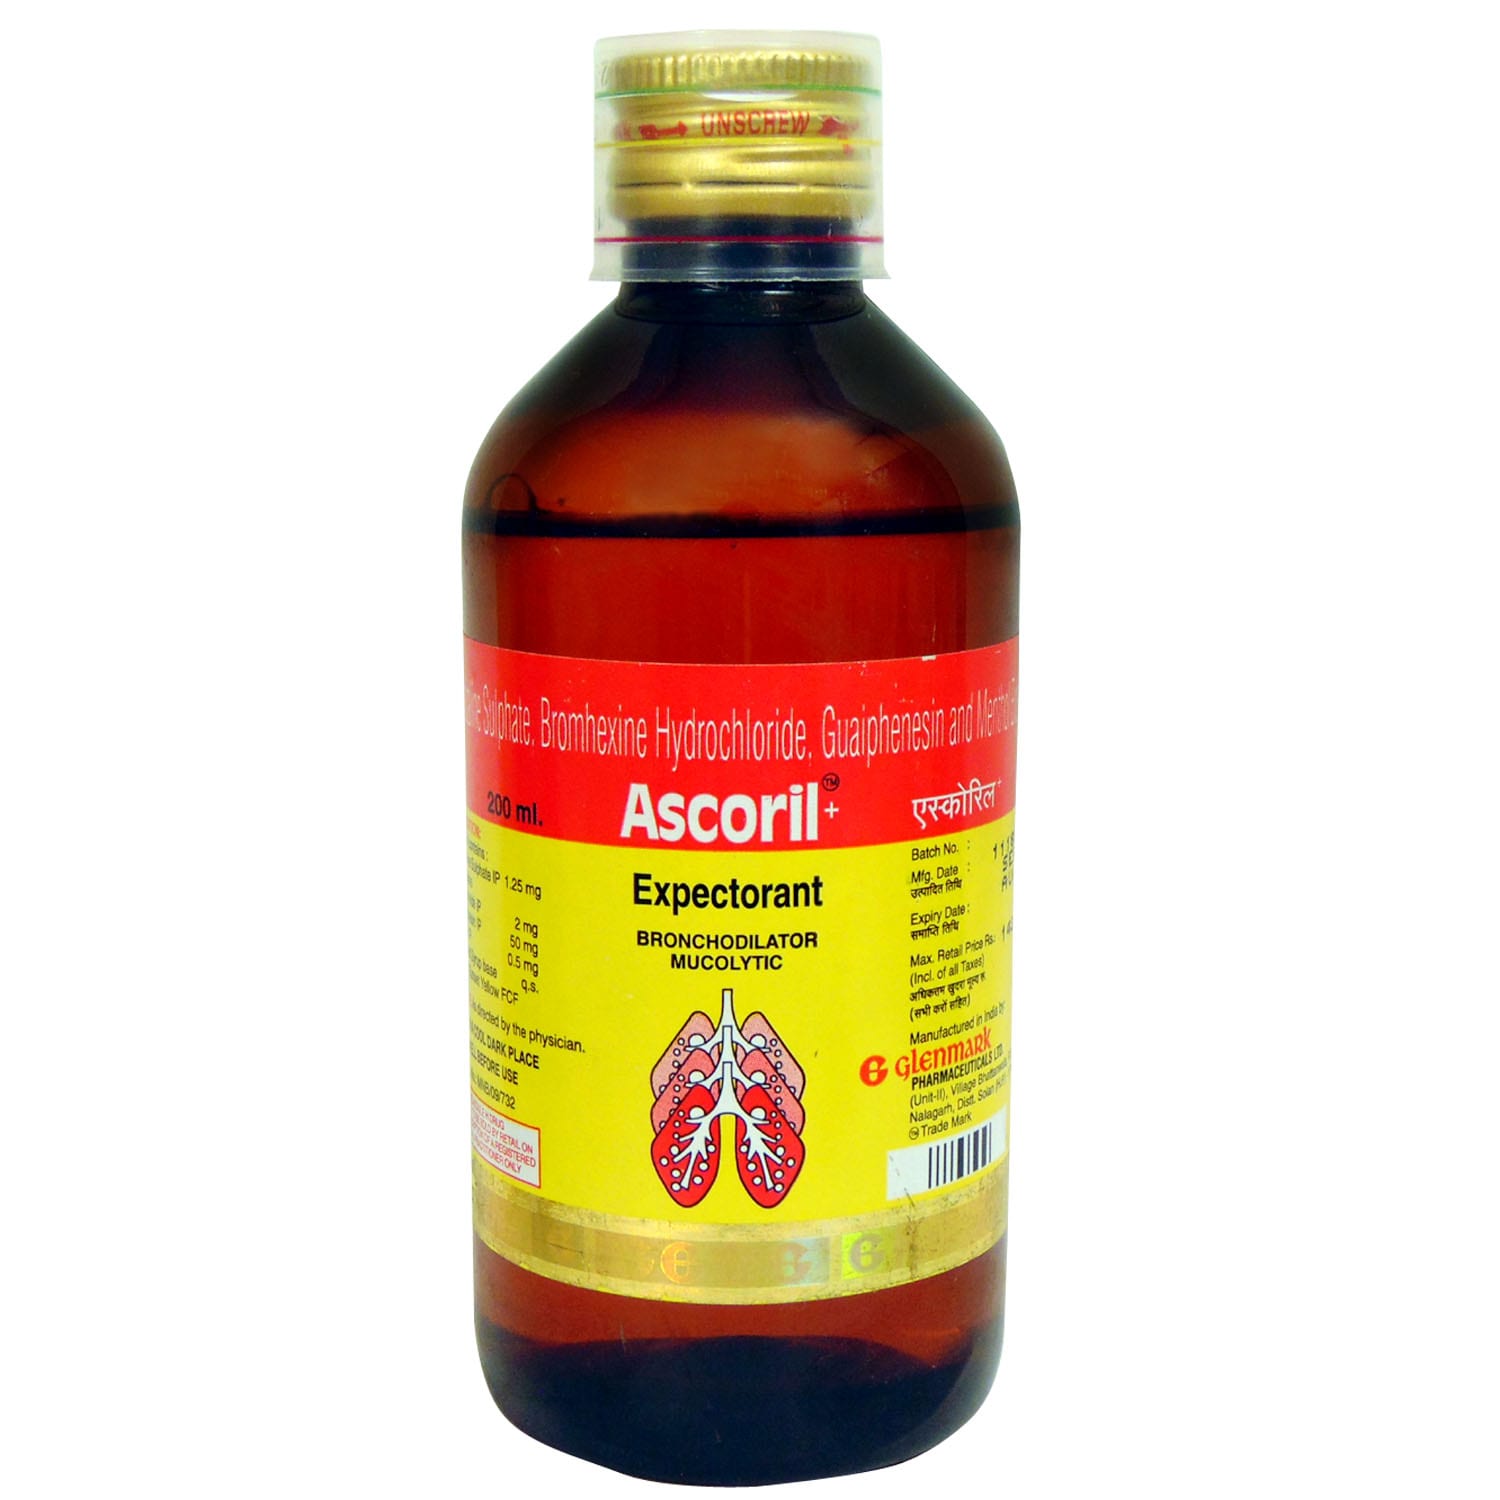 https://healthygk.com/wp-content/uploads/2022/09/Ascoril-Syrup.jpg